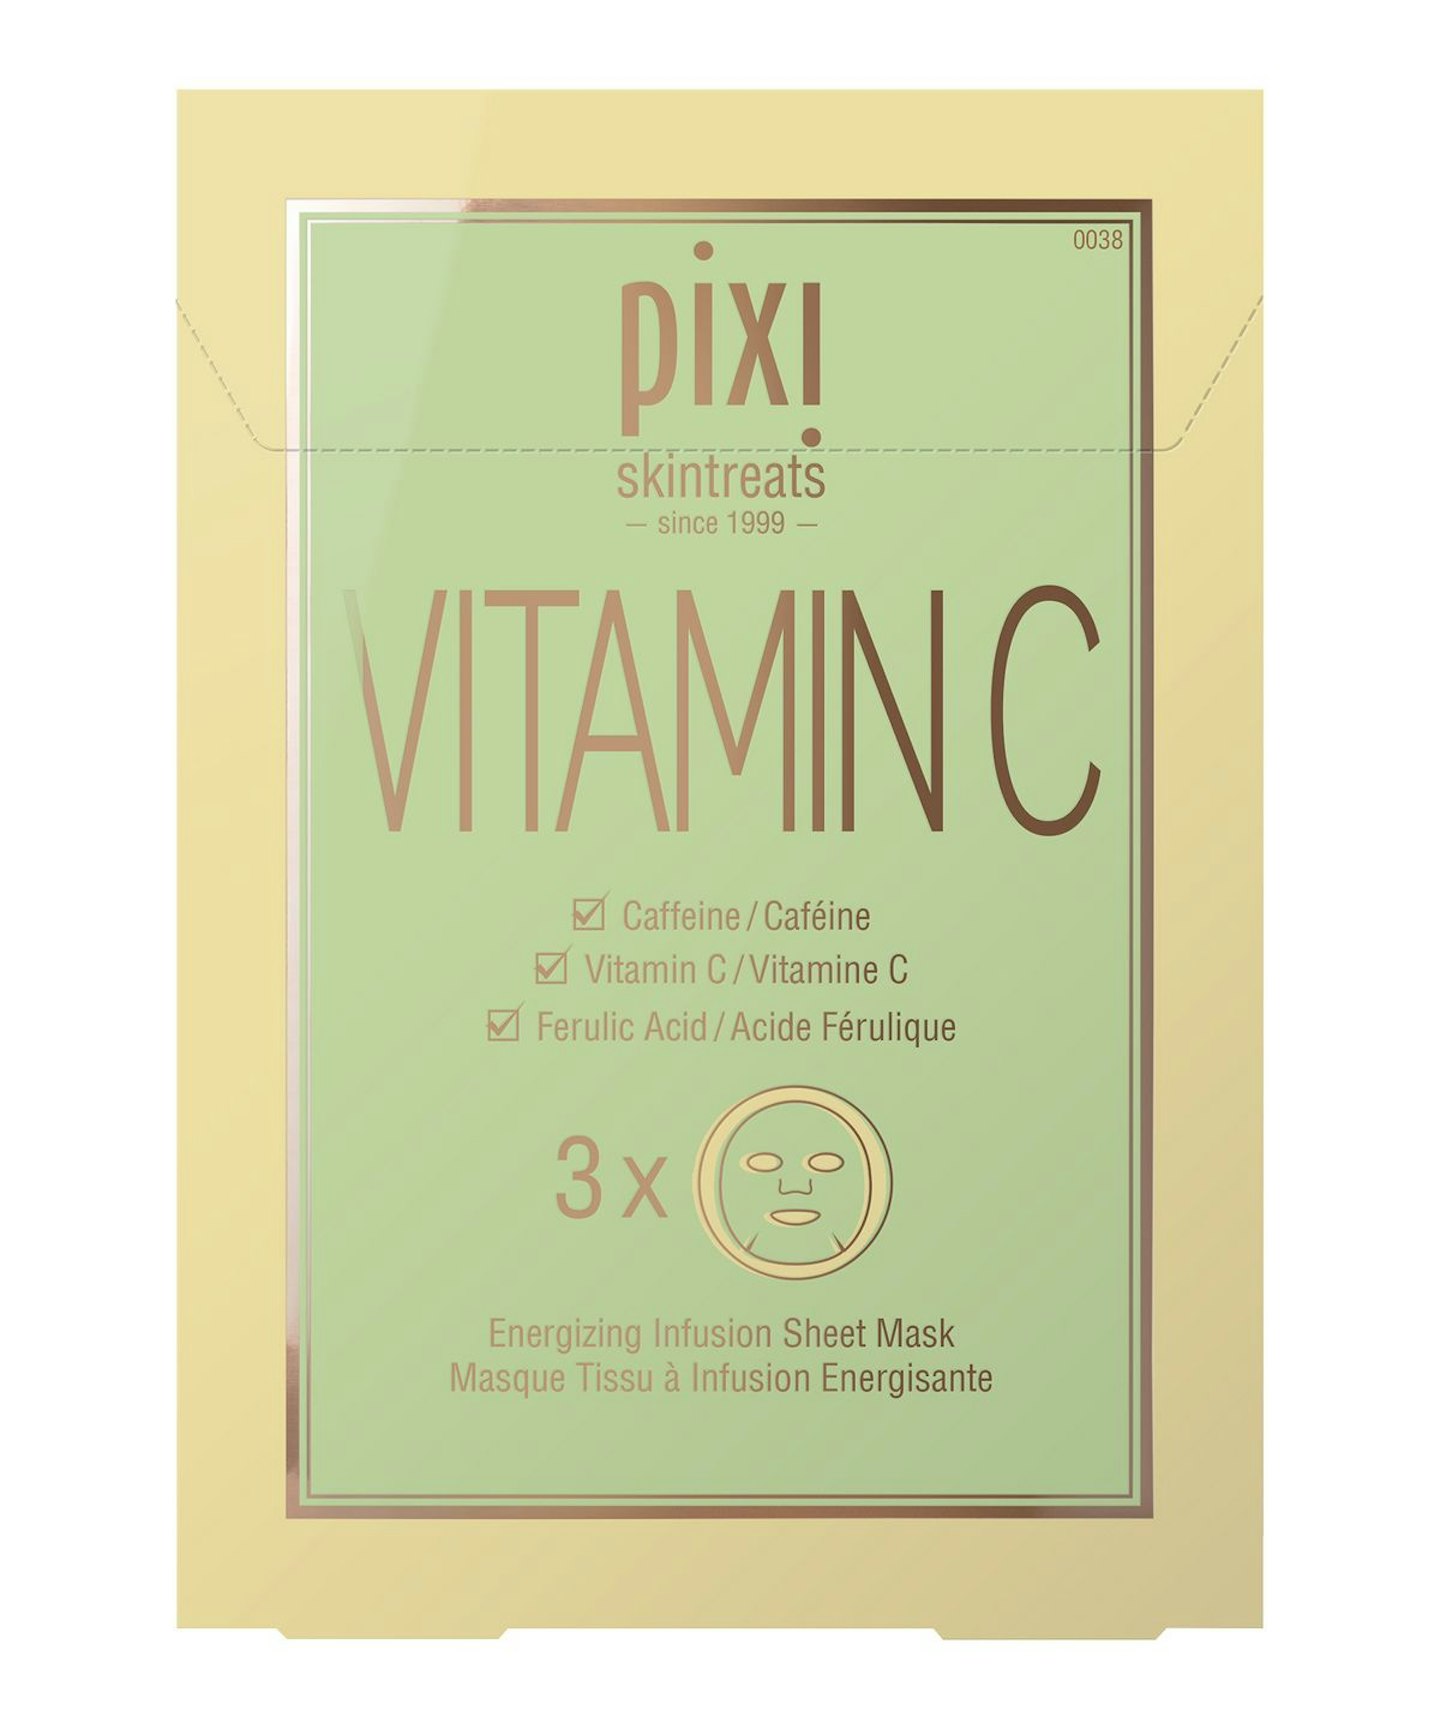 Pixi Vitamin-C Energizing Infusion Sheet Mask, £10 for 3